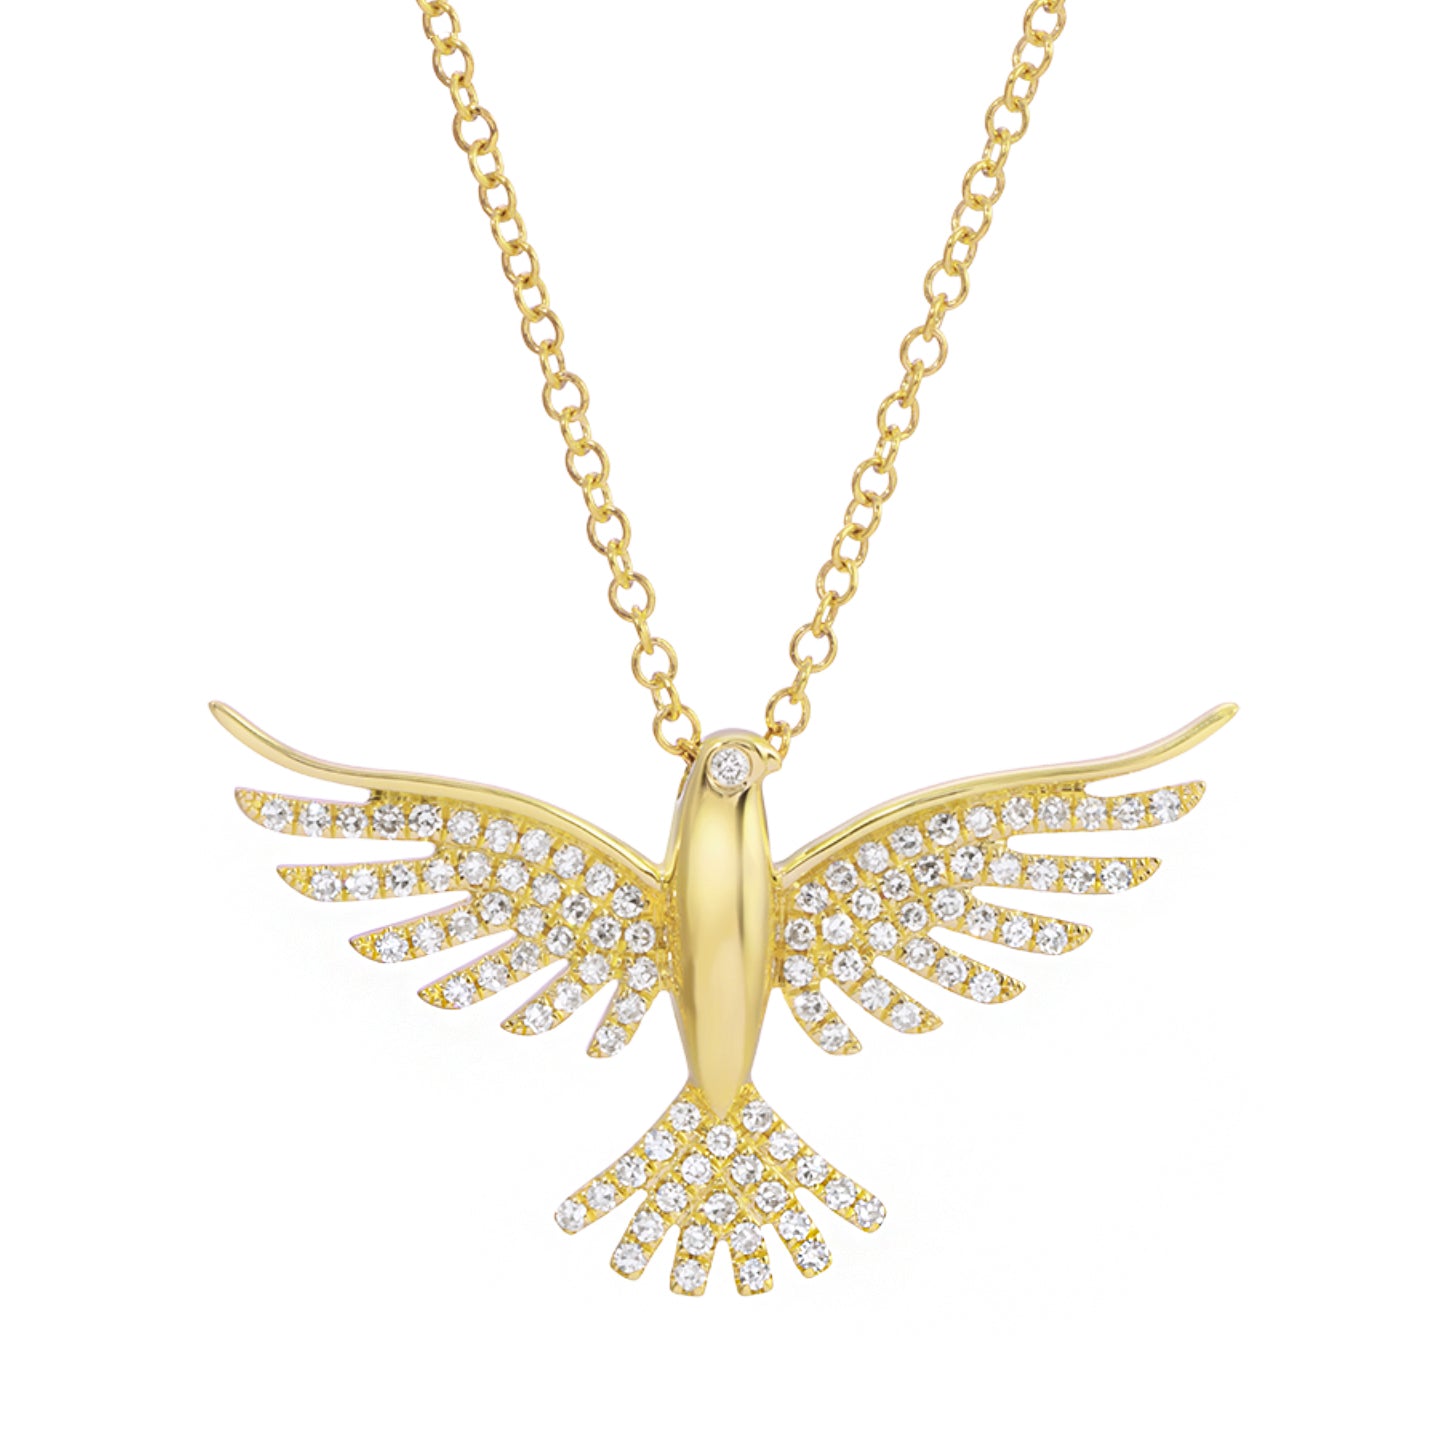 Rising phoenix bird necklace with diamonds